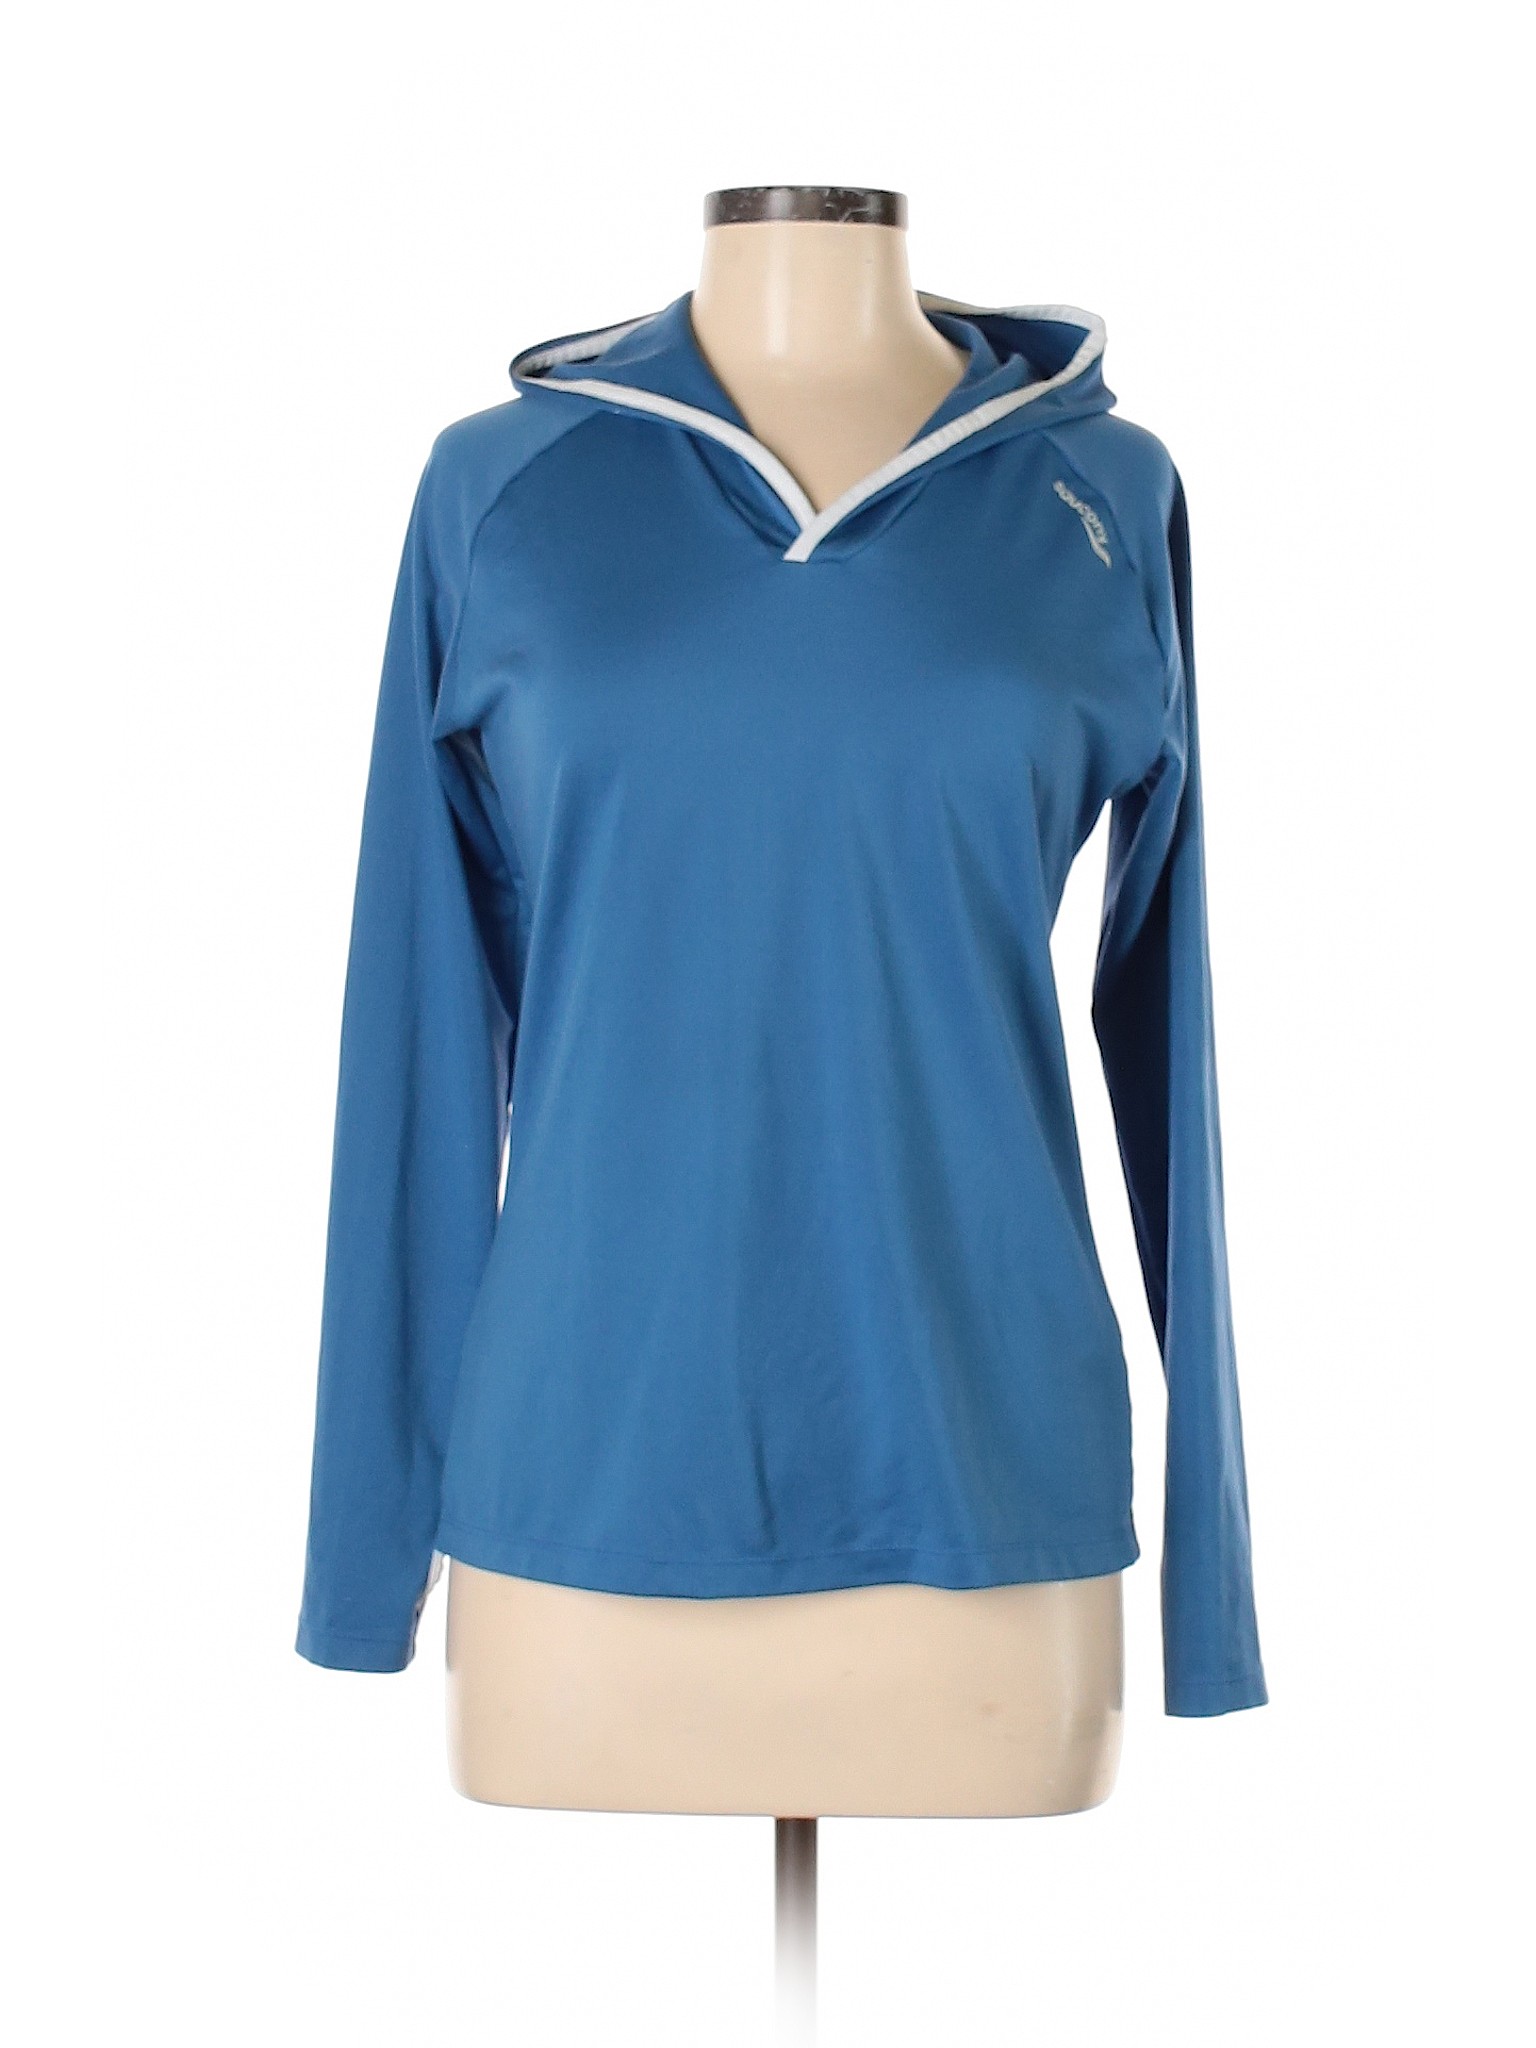 saucony hoodie blue